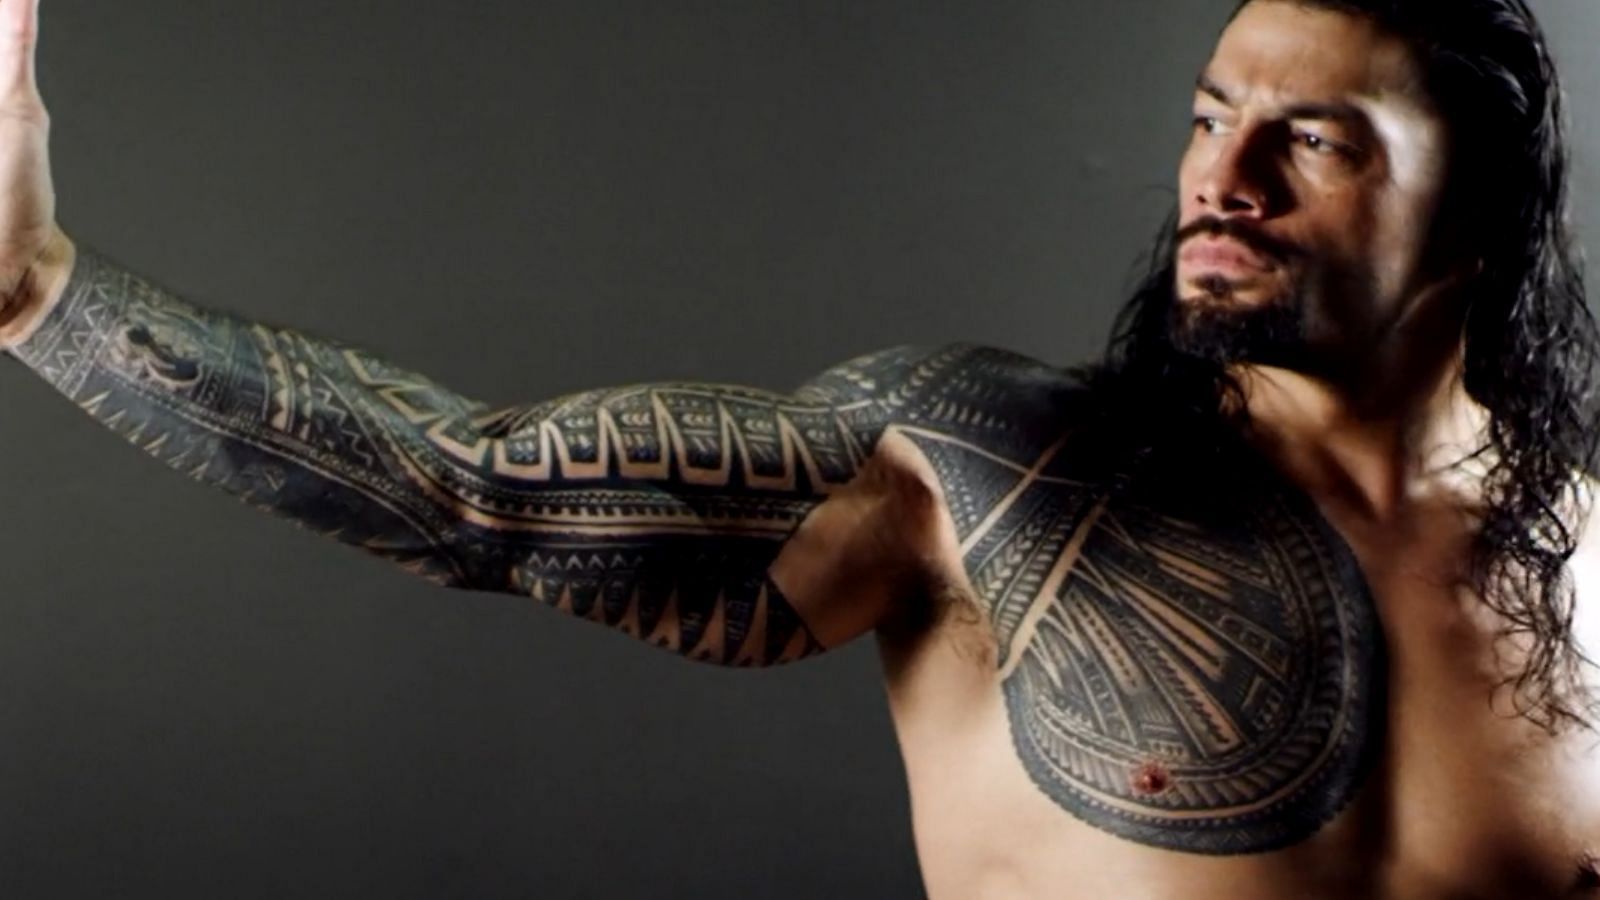 Roman Reigns Tattoo #romanreigns #romanempire #romanreignfans #thebigdog |  Roman reigns tattoo, Hand tattoos, Tattoos